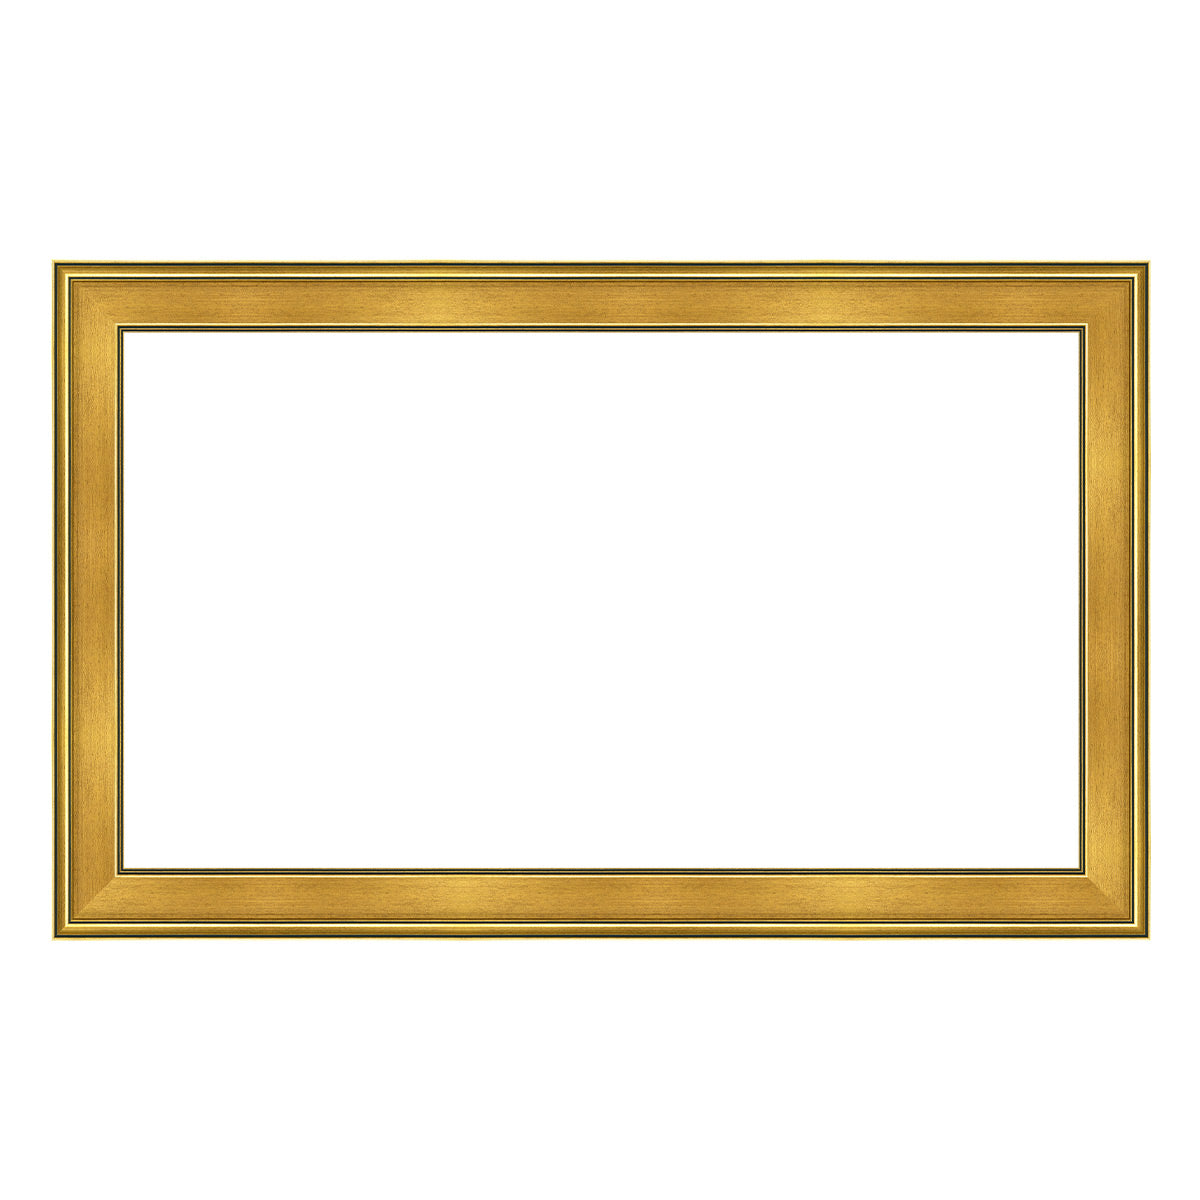 Deco TV Frames 43" Customizable Frame for Samsung The Frame TV 2021-2023 (Antique Gold)